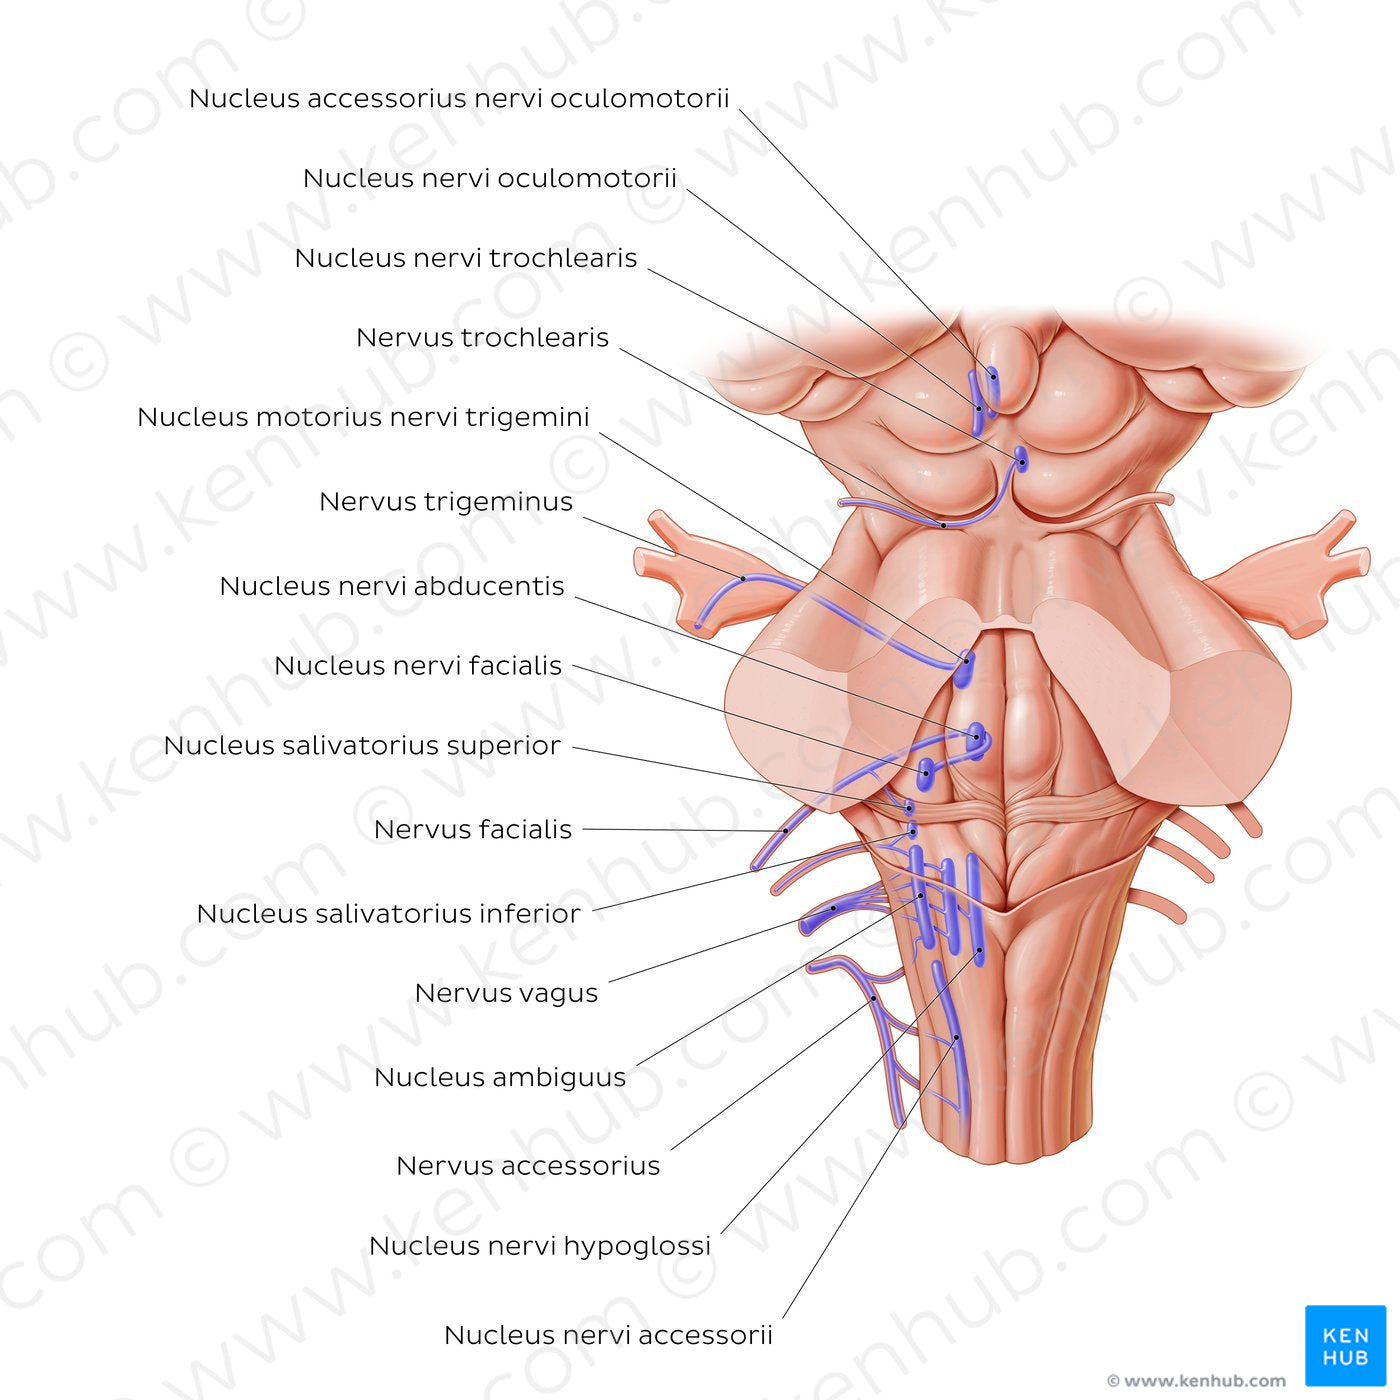 Cranial nerve nuclei - posterior view (efferent) (Latin)